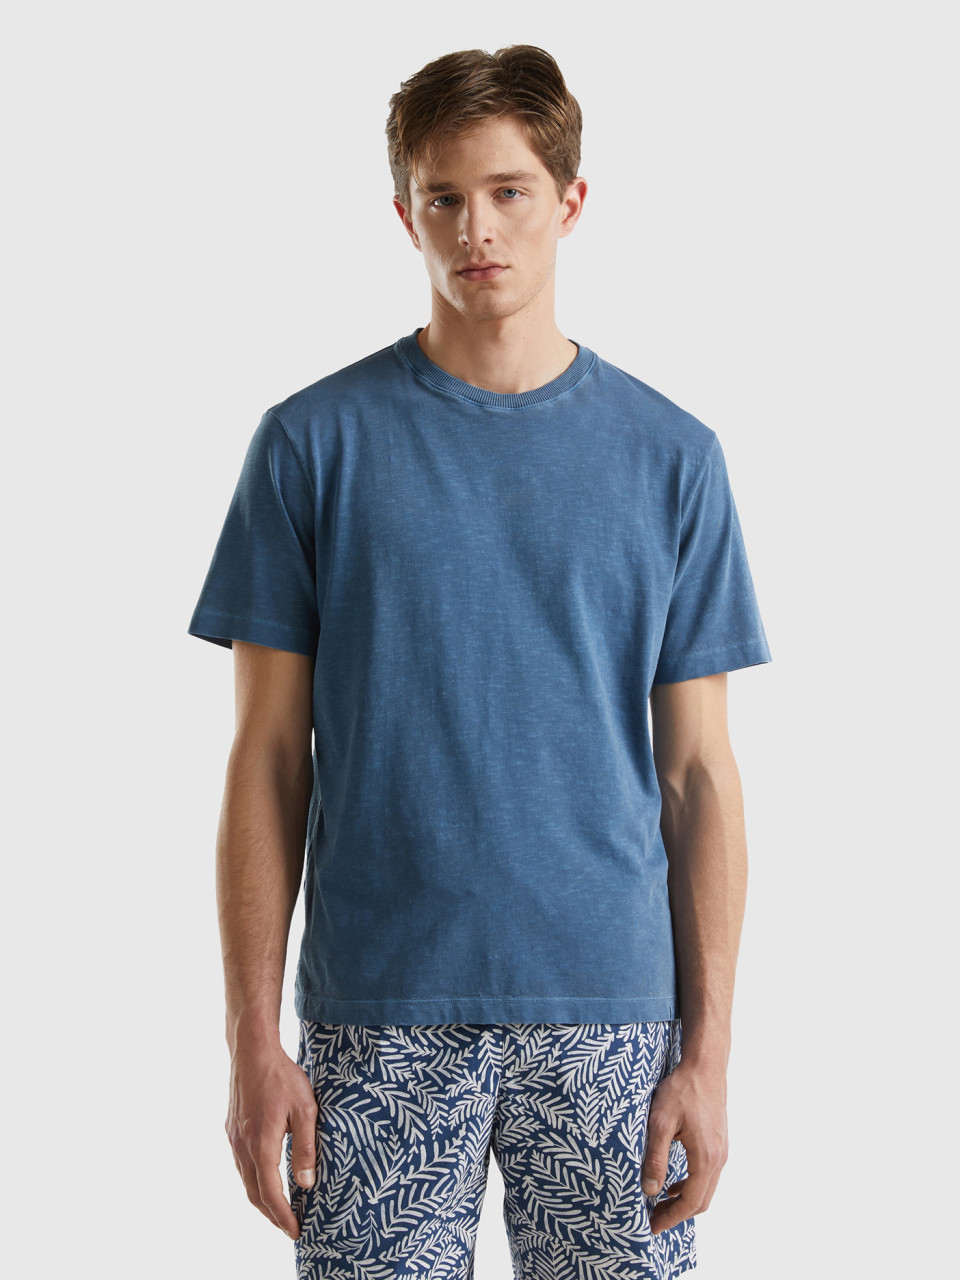 Benetton, Leichtes T-shirt Relaxed Fit, Taubenblau, male